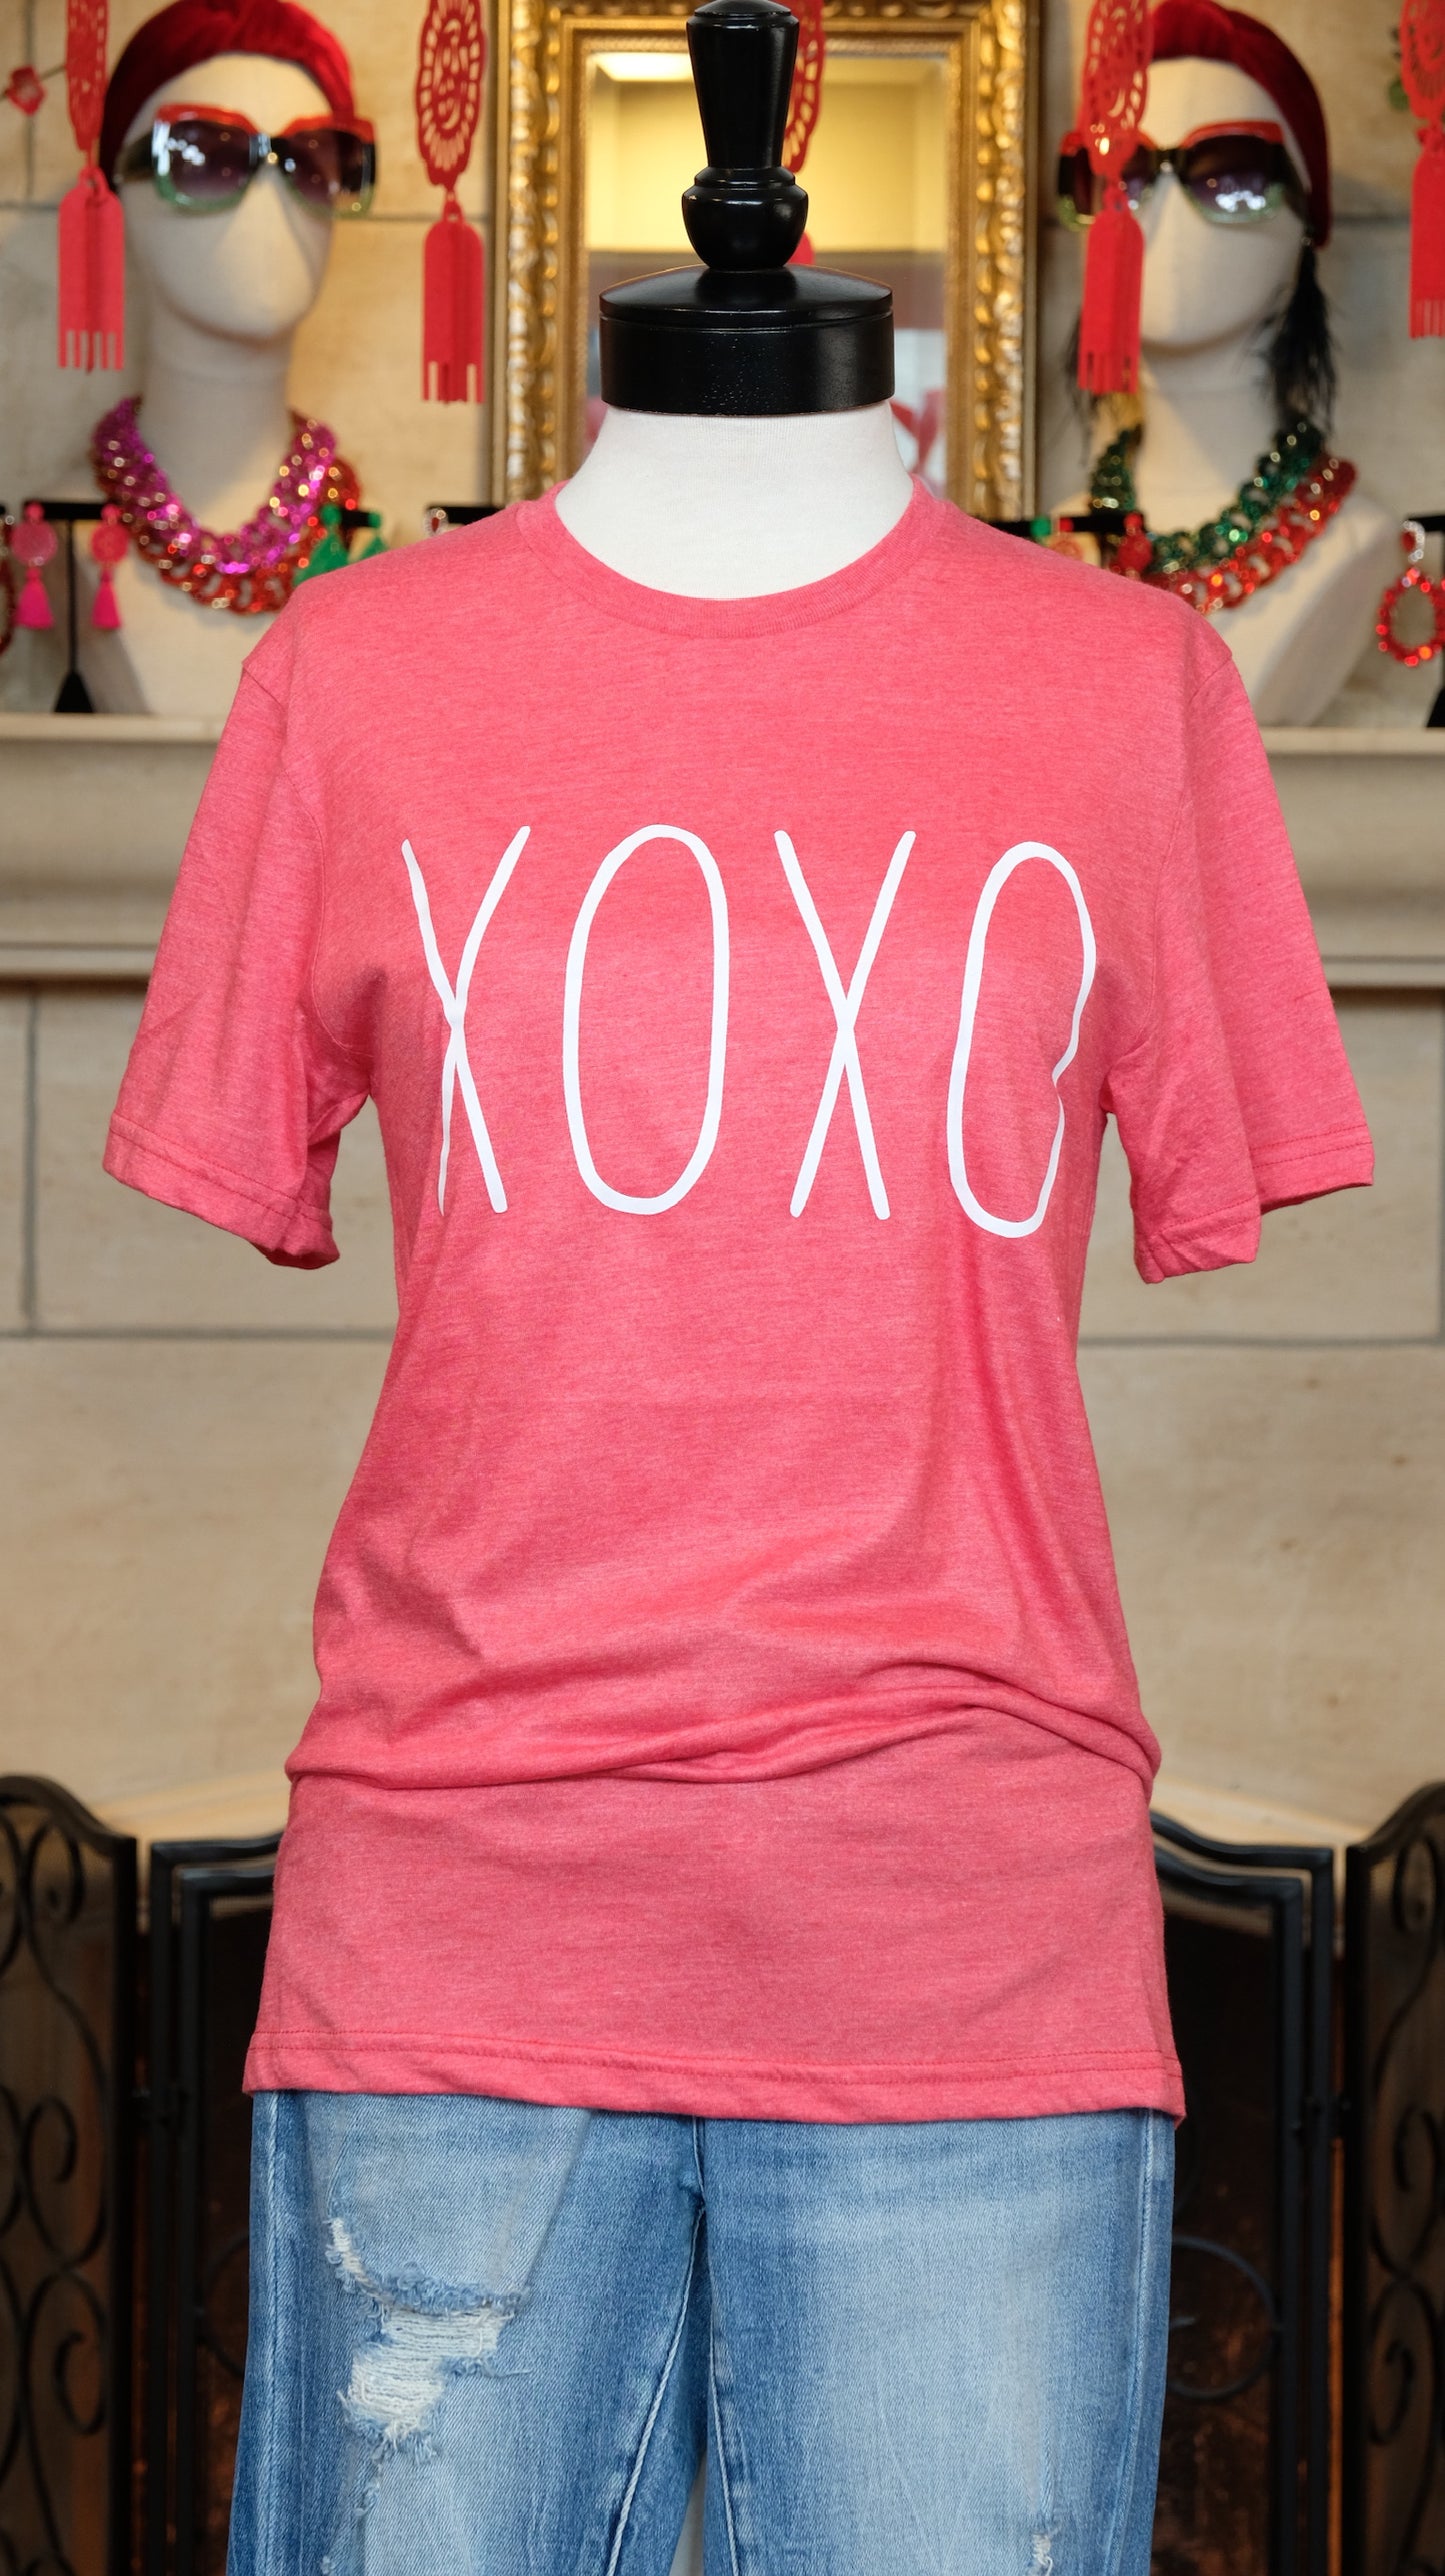 XoXo T-Shirt